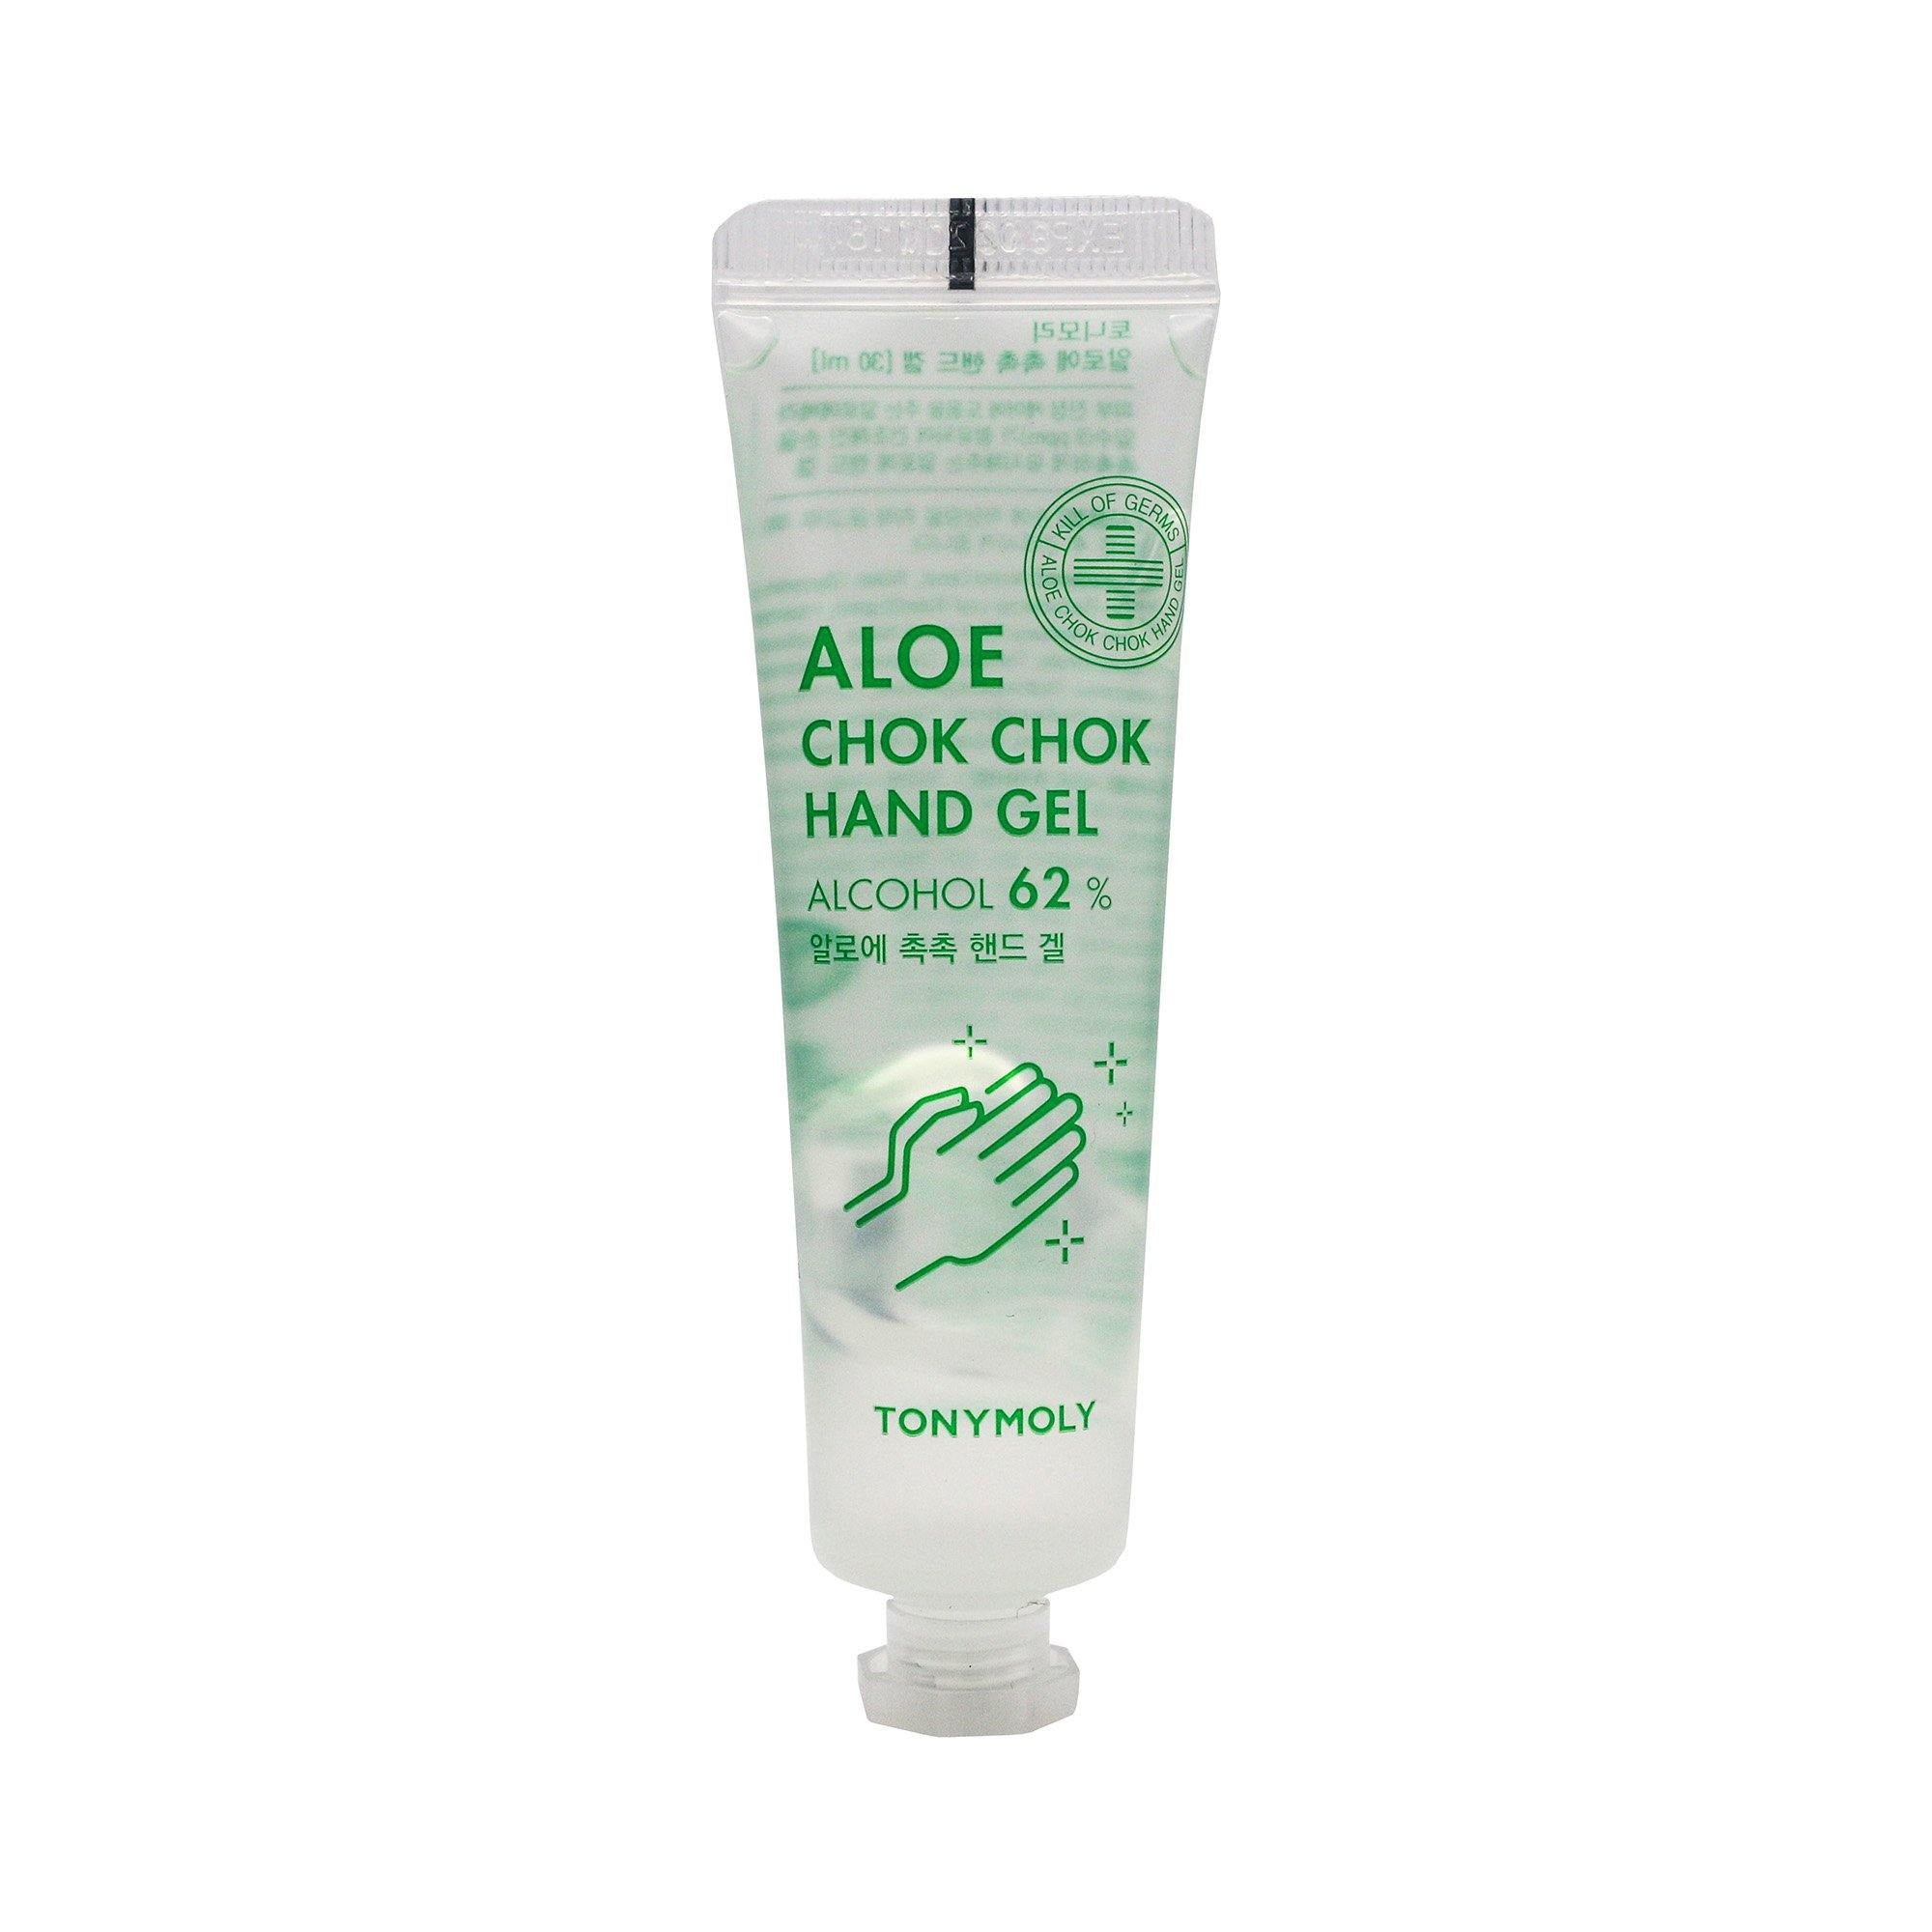 TONYMOLY Aloe Chok Chok Hand Gel 30ml 62% Alcohol | Korean Skin Care -  TONYMOLY OFFICIAL